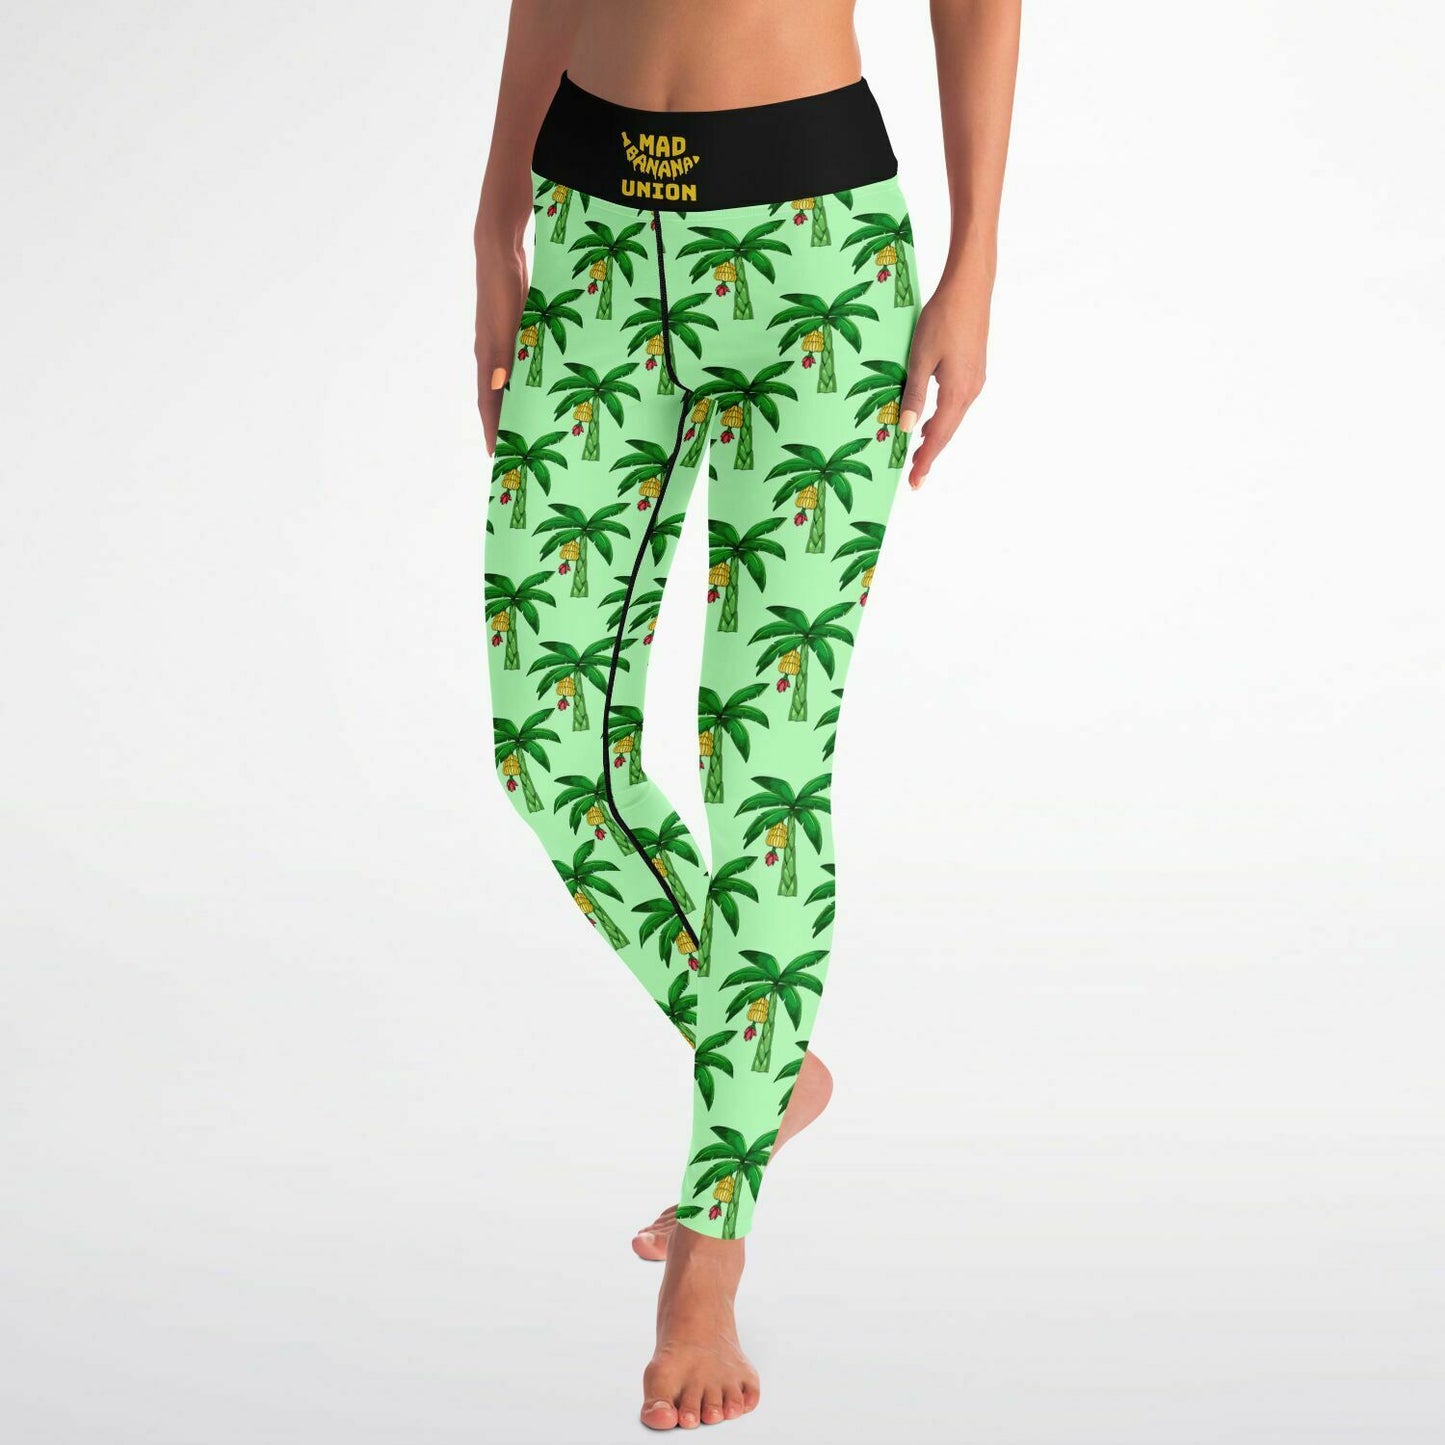 MBU Yoga Pants - Palm Tree Pattern